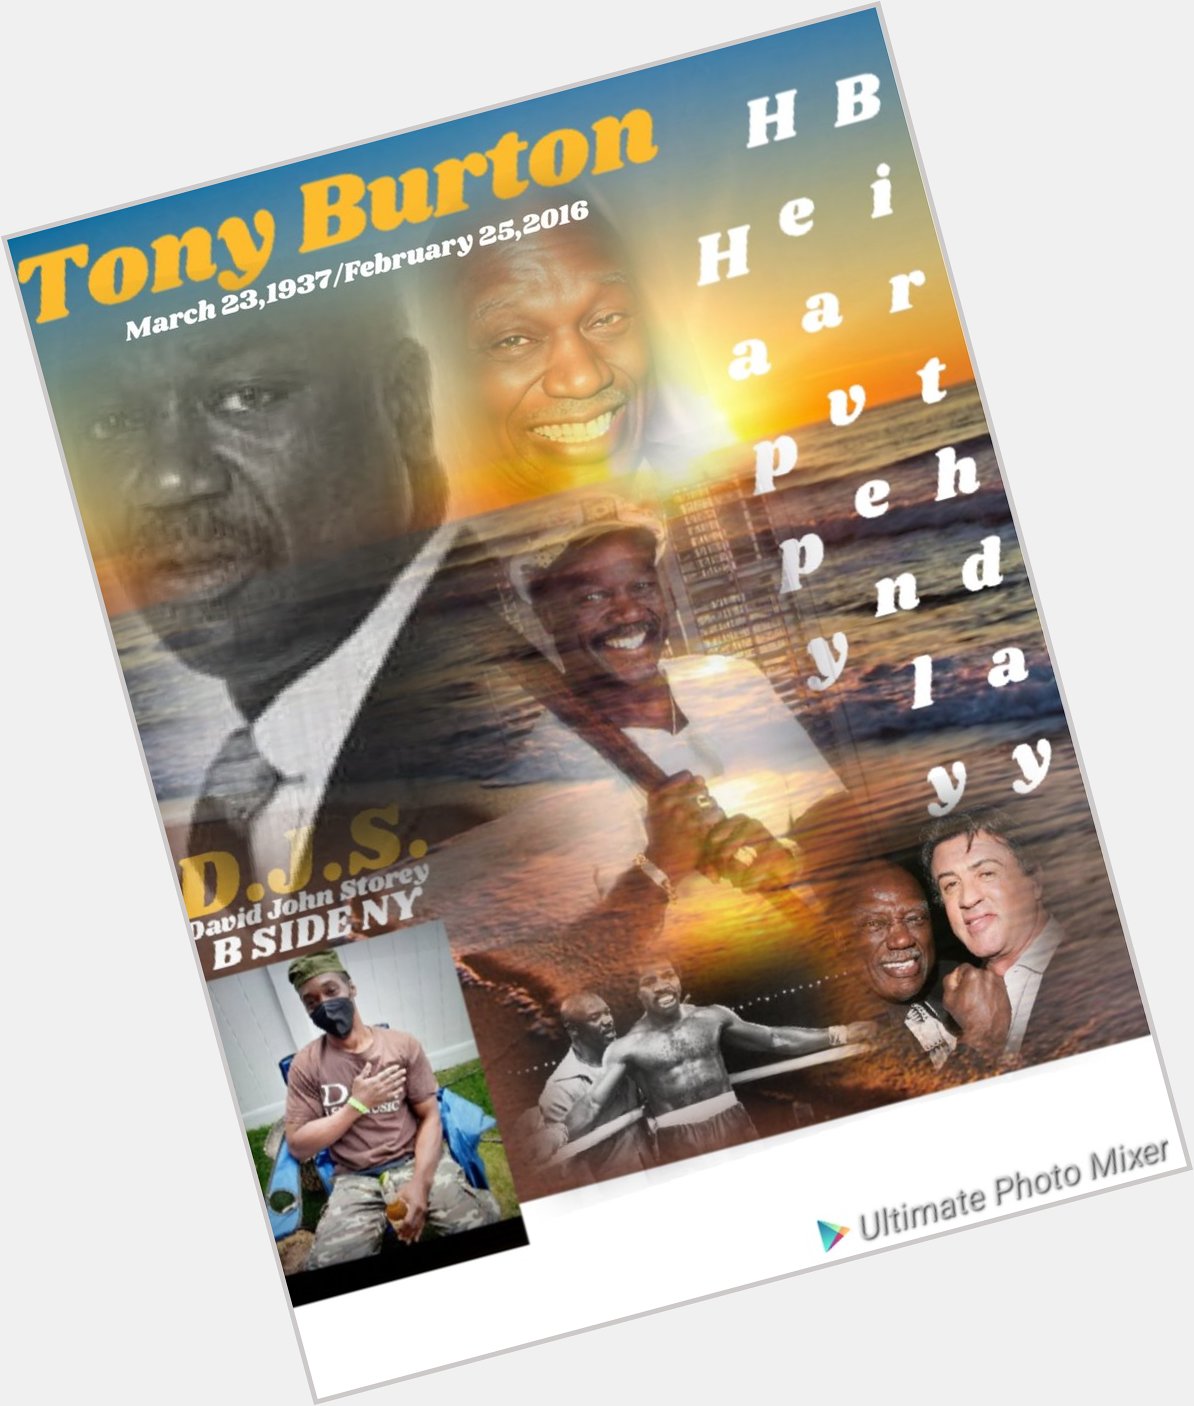 I(D.J.S.)\"B SIDE\" taking time to say Happy Heavenly Birthday to Actor: \"TONY BURTON\"!!!! 